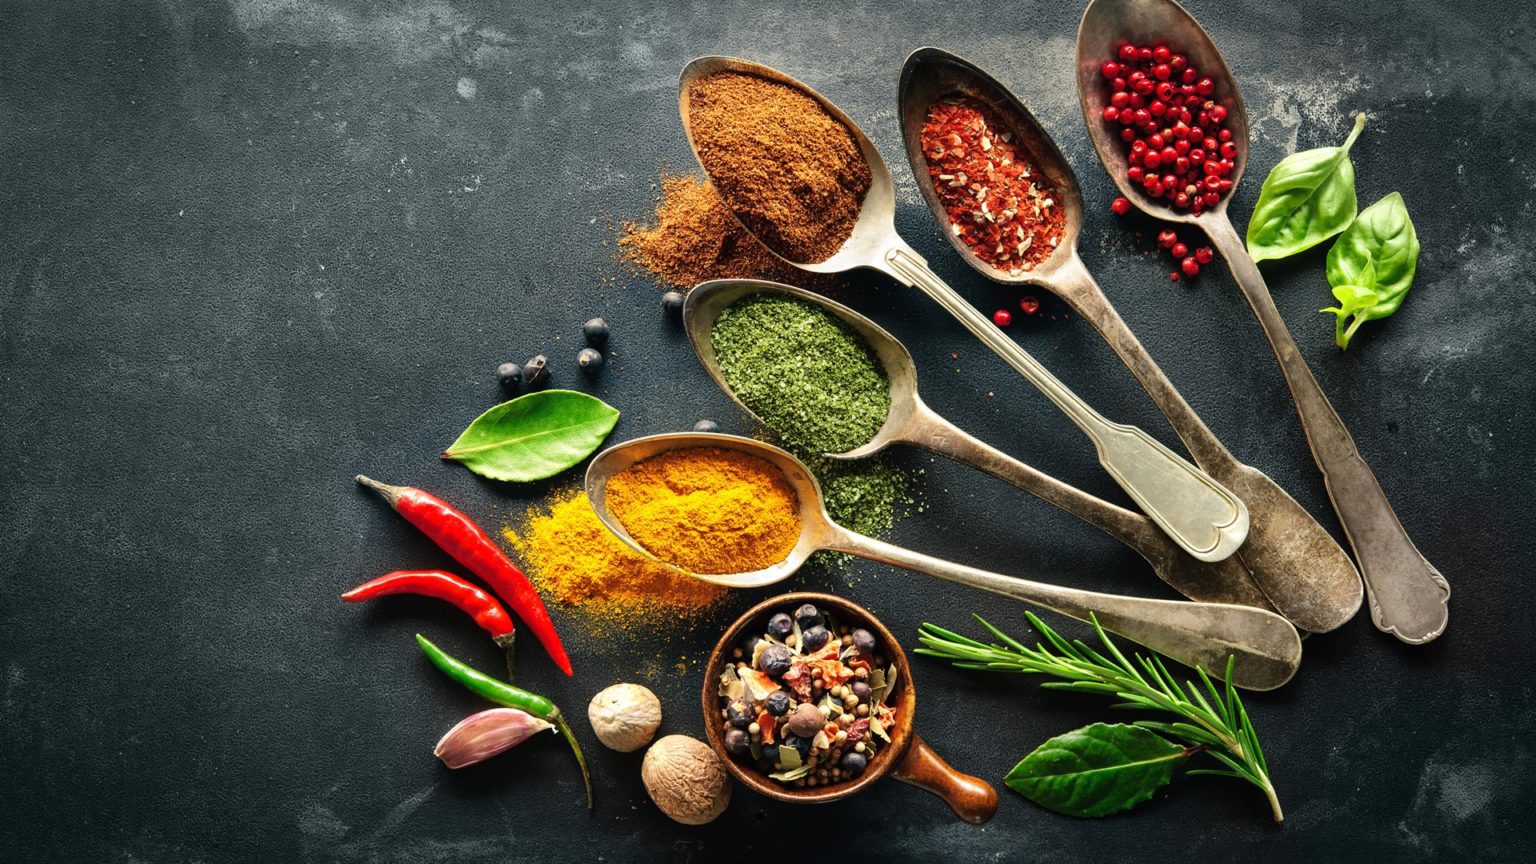 Seasoning-spices-pepper-spoon-nuts-leaves_1920x1080